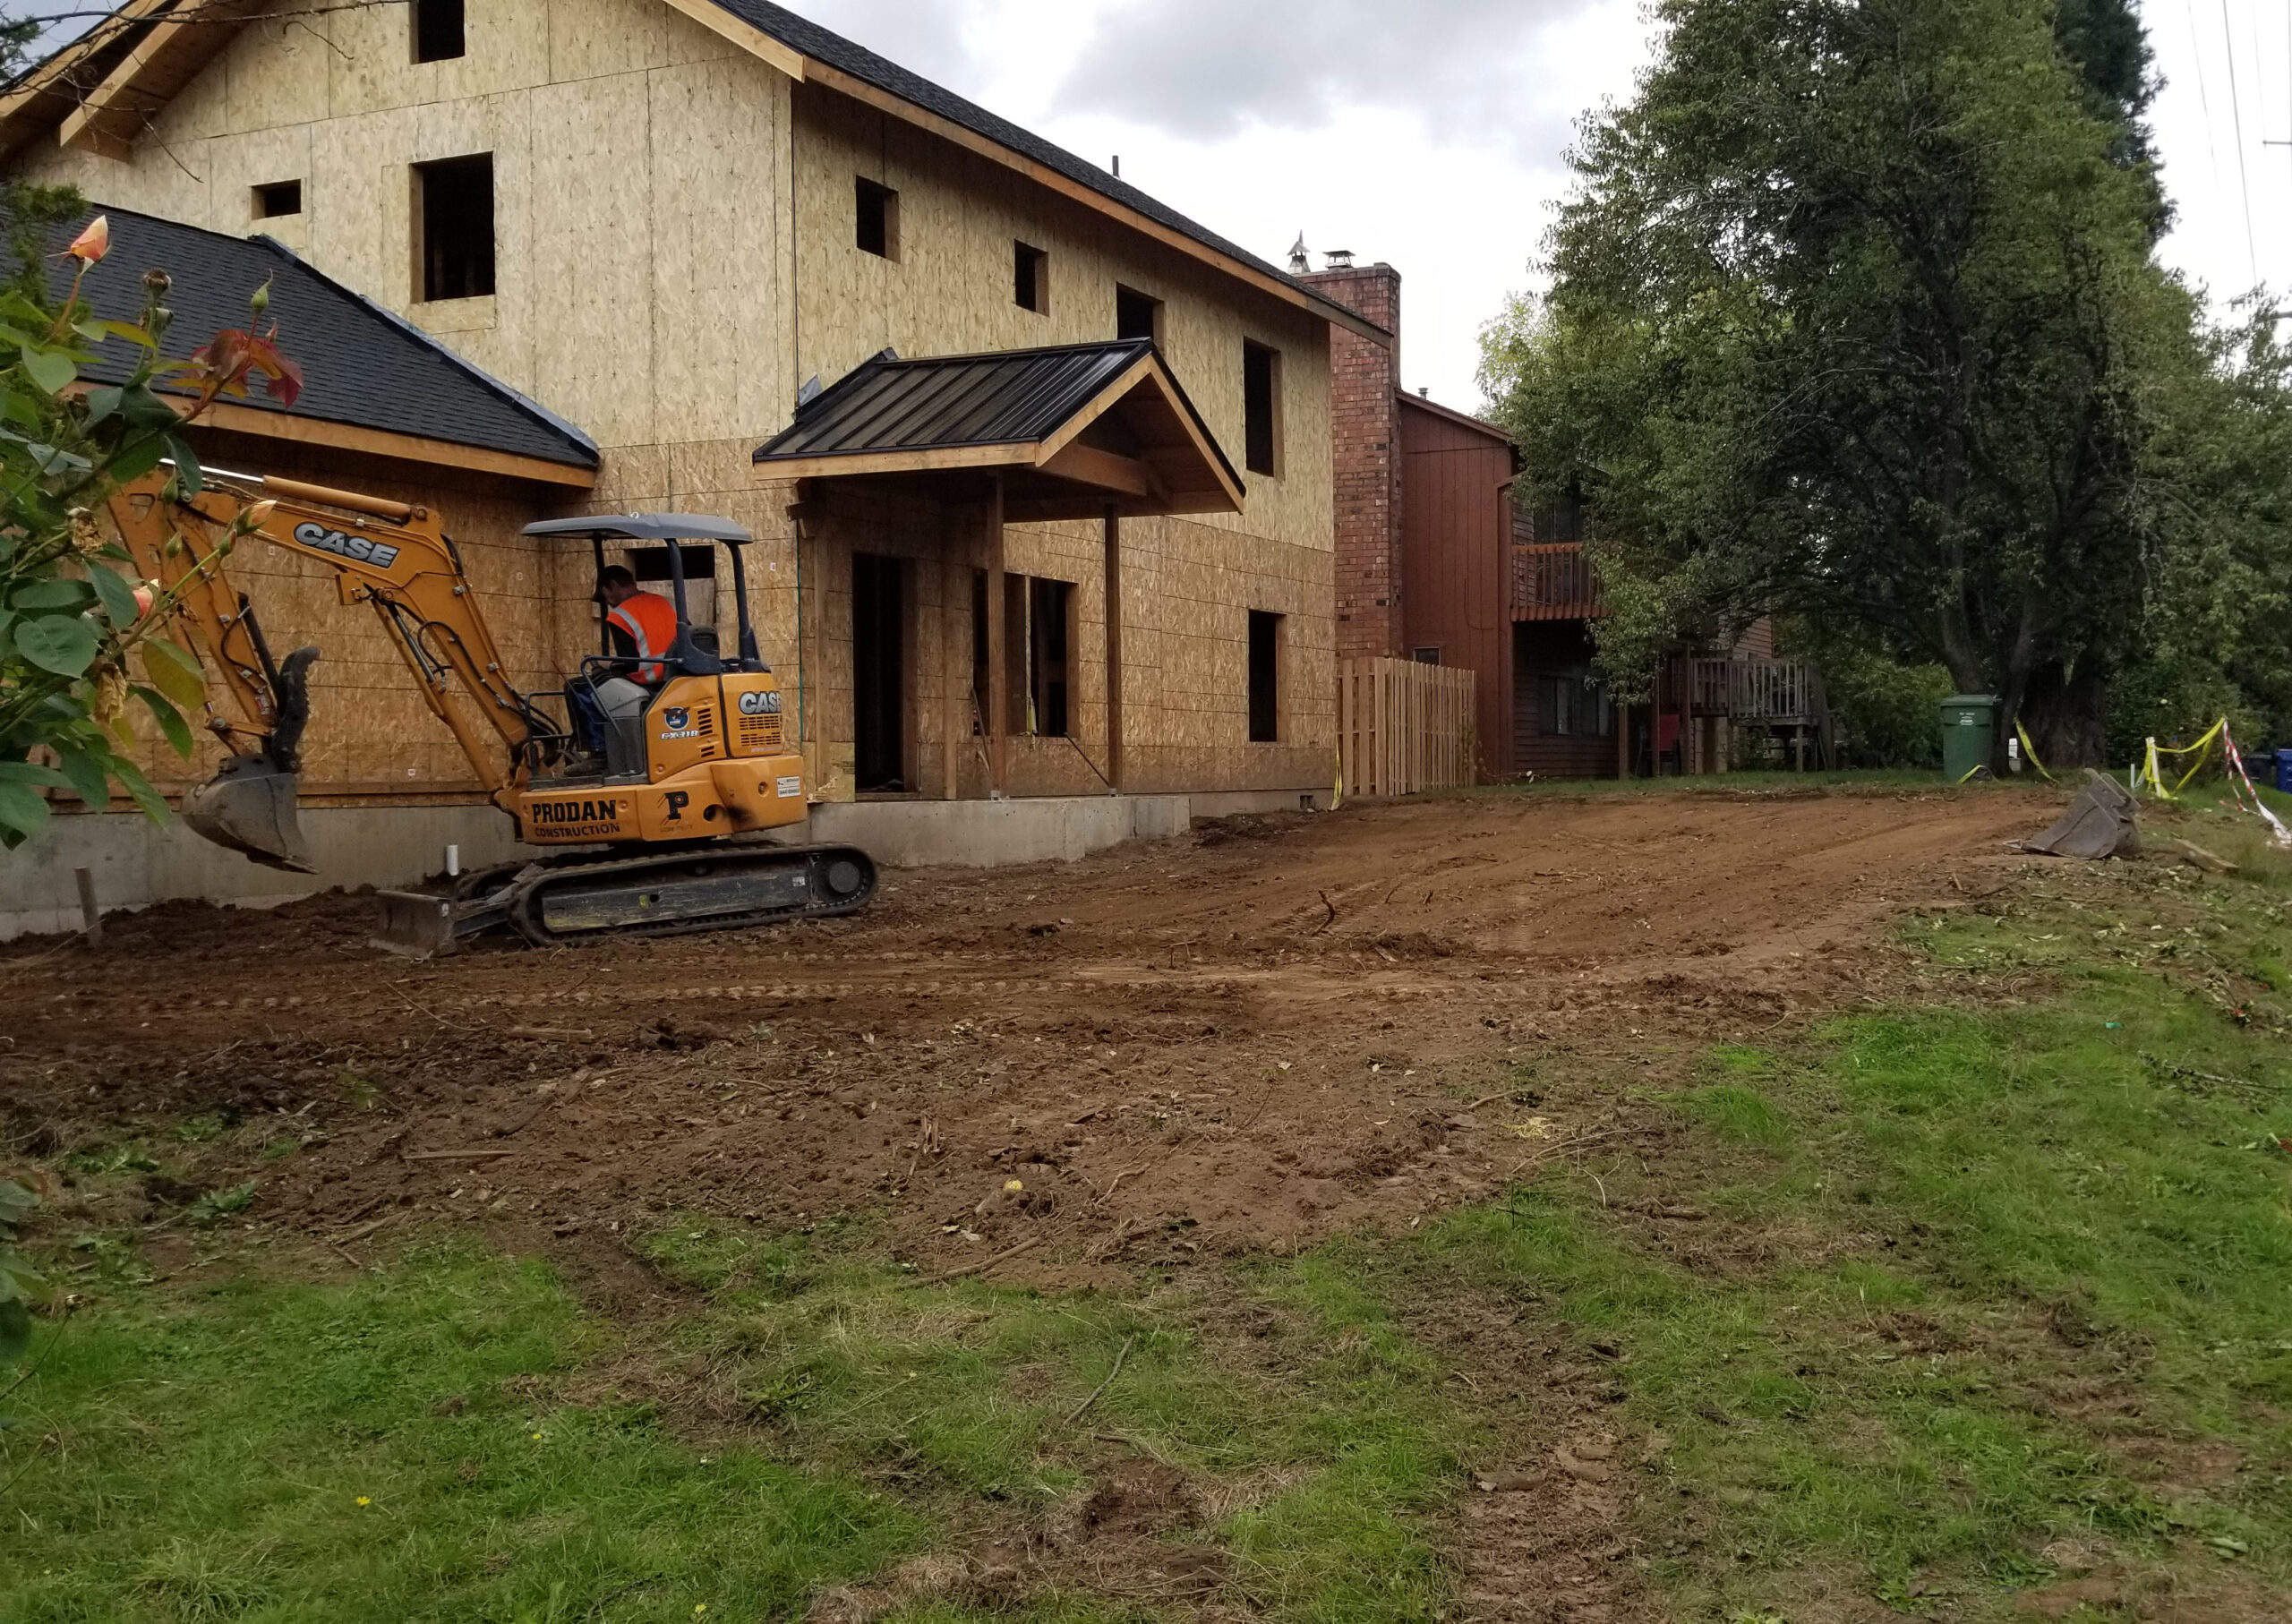 Prodan LLC - excavation services for septic tank installation